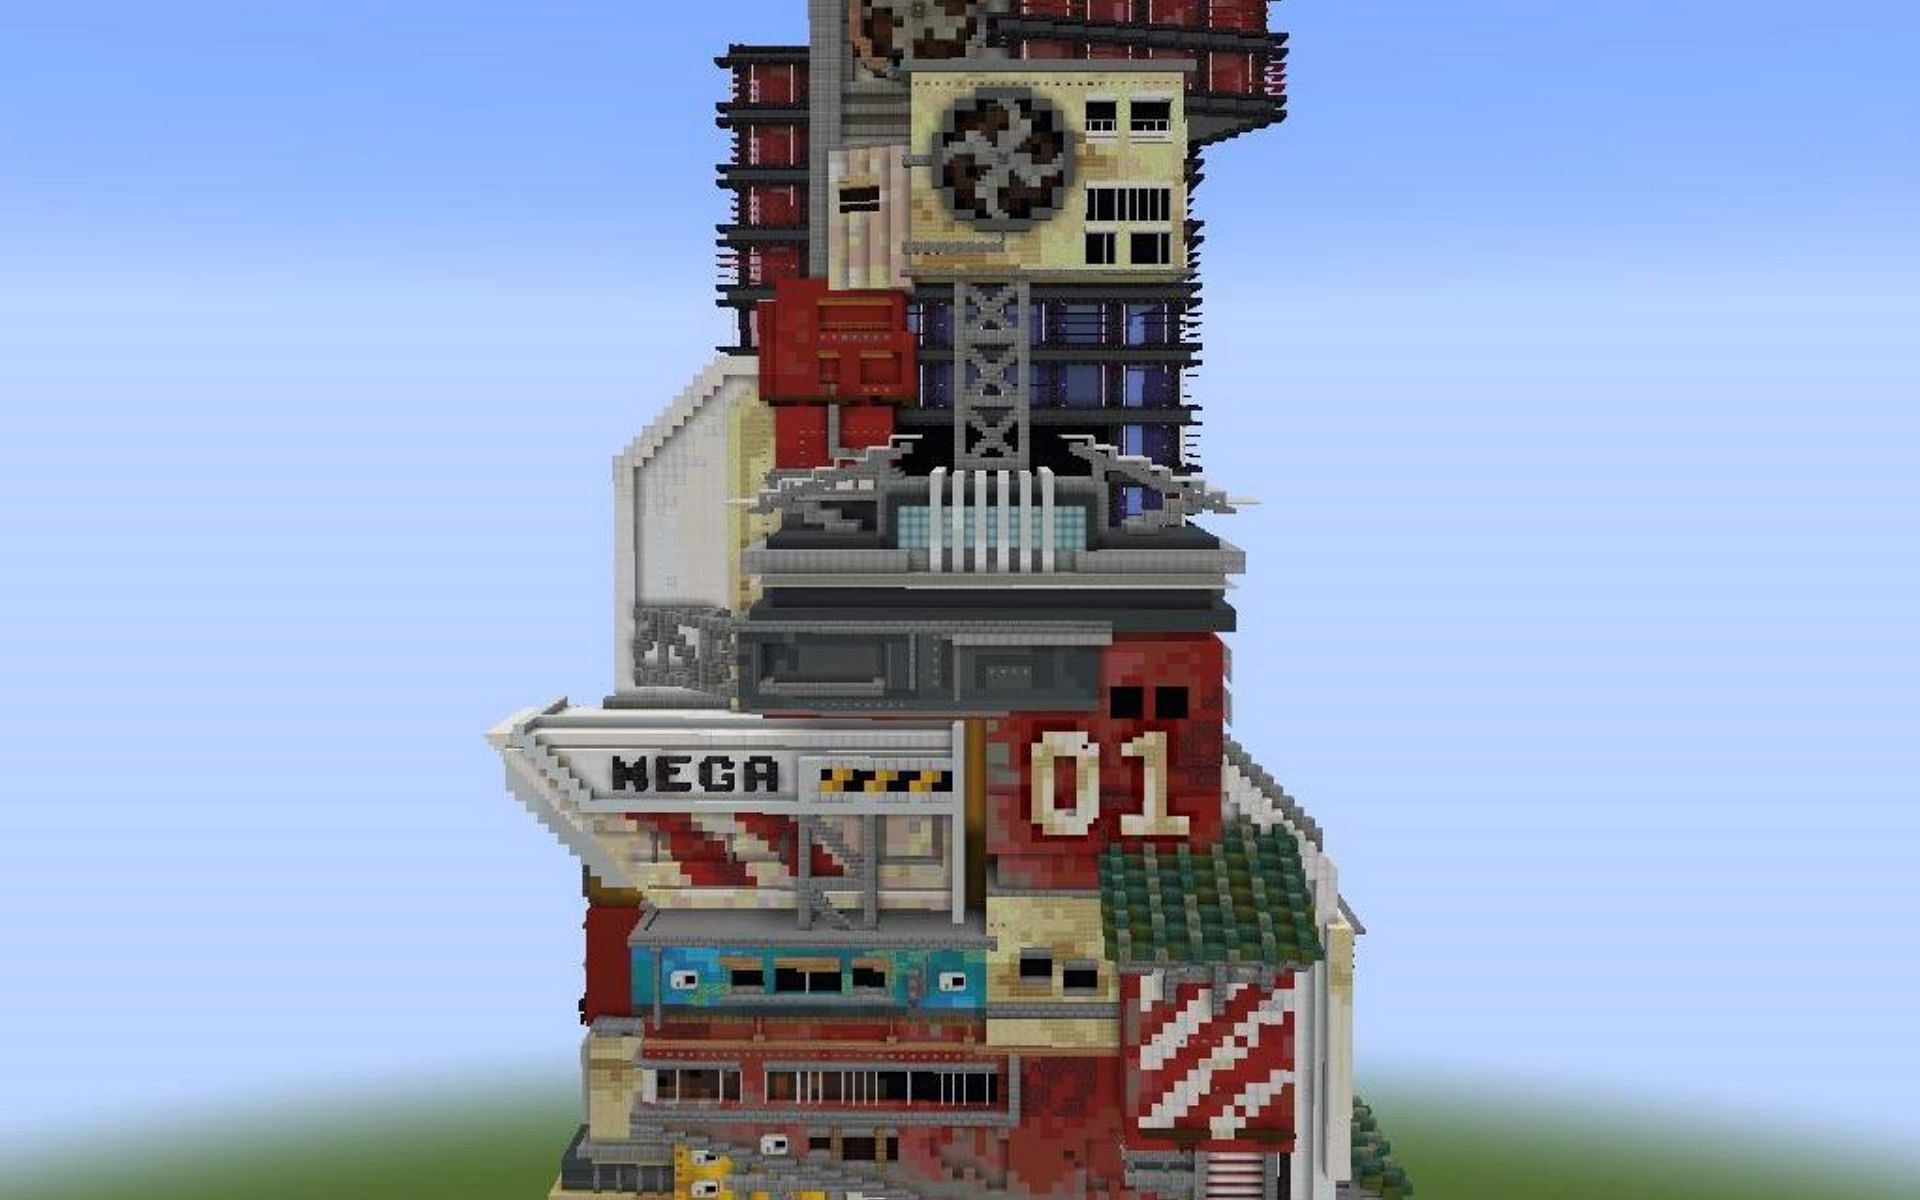 Cyberpunk skyscraper built in Minecraft (Image via u/Megatorius Reddit)